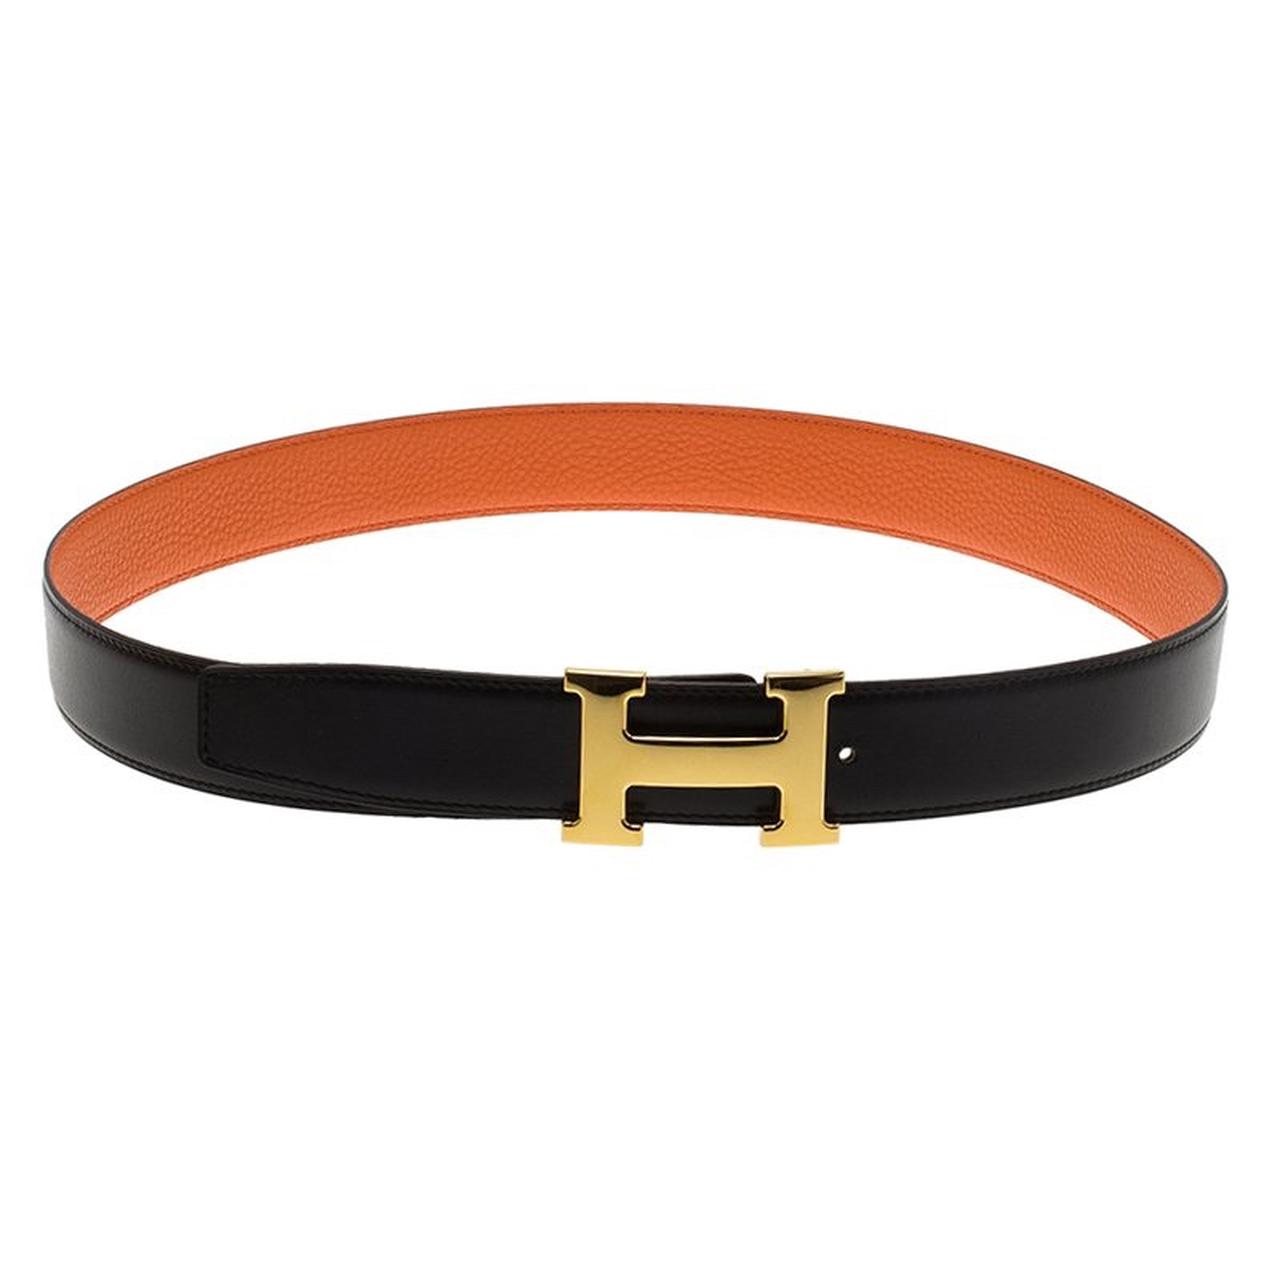 AUTHENTIC HERMES H belt buckle & Reversible leather... - Depop